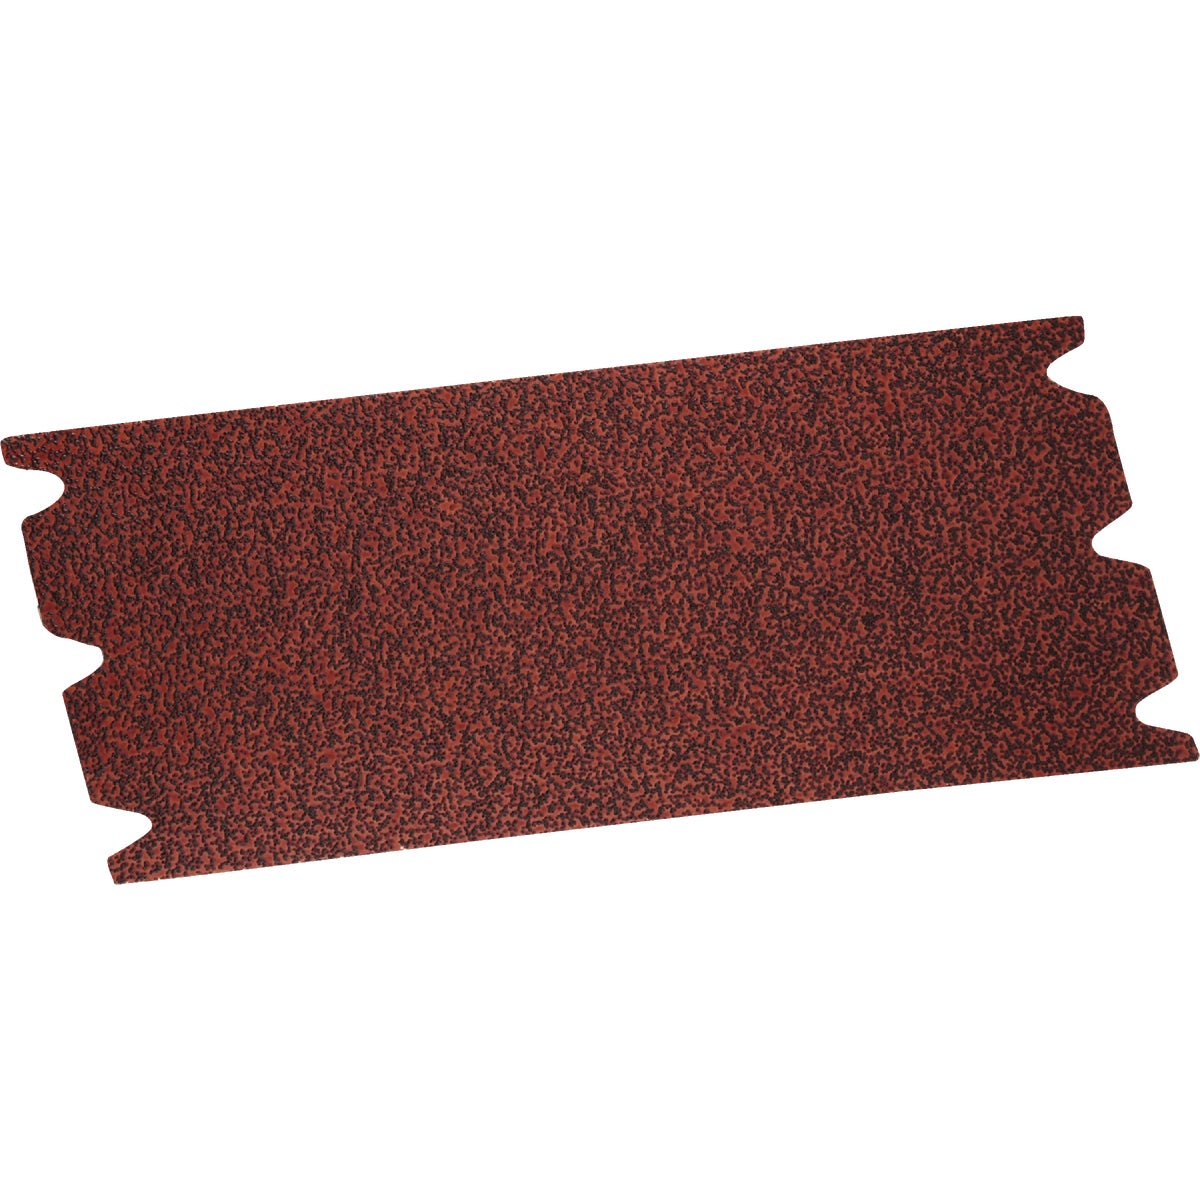 Virginia Abrasives 8 In. x 19-1/2 In. 60 Grit Floor Sanding Sheet for EZ-8, EC-8, MV-8, DU-8 Drum Sanders